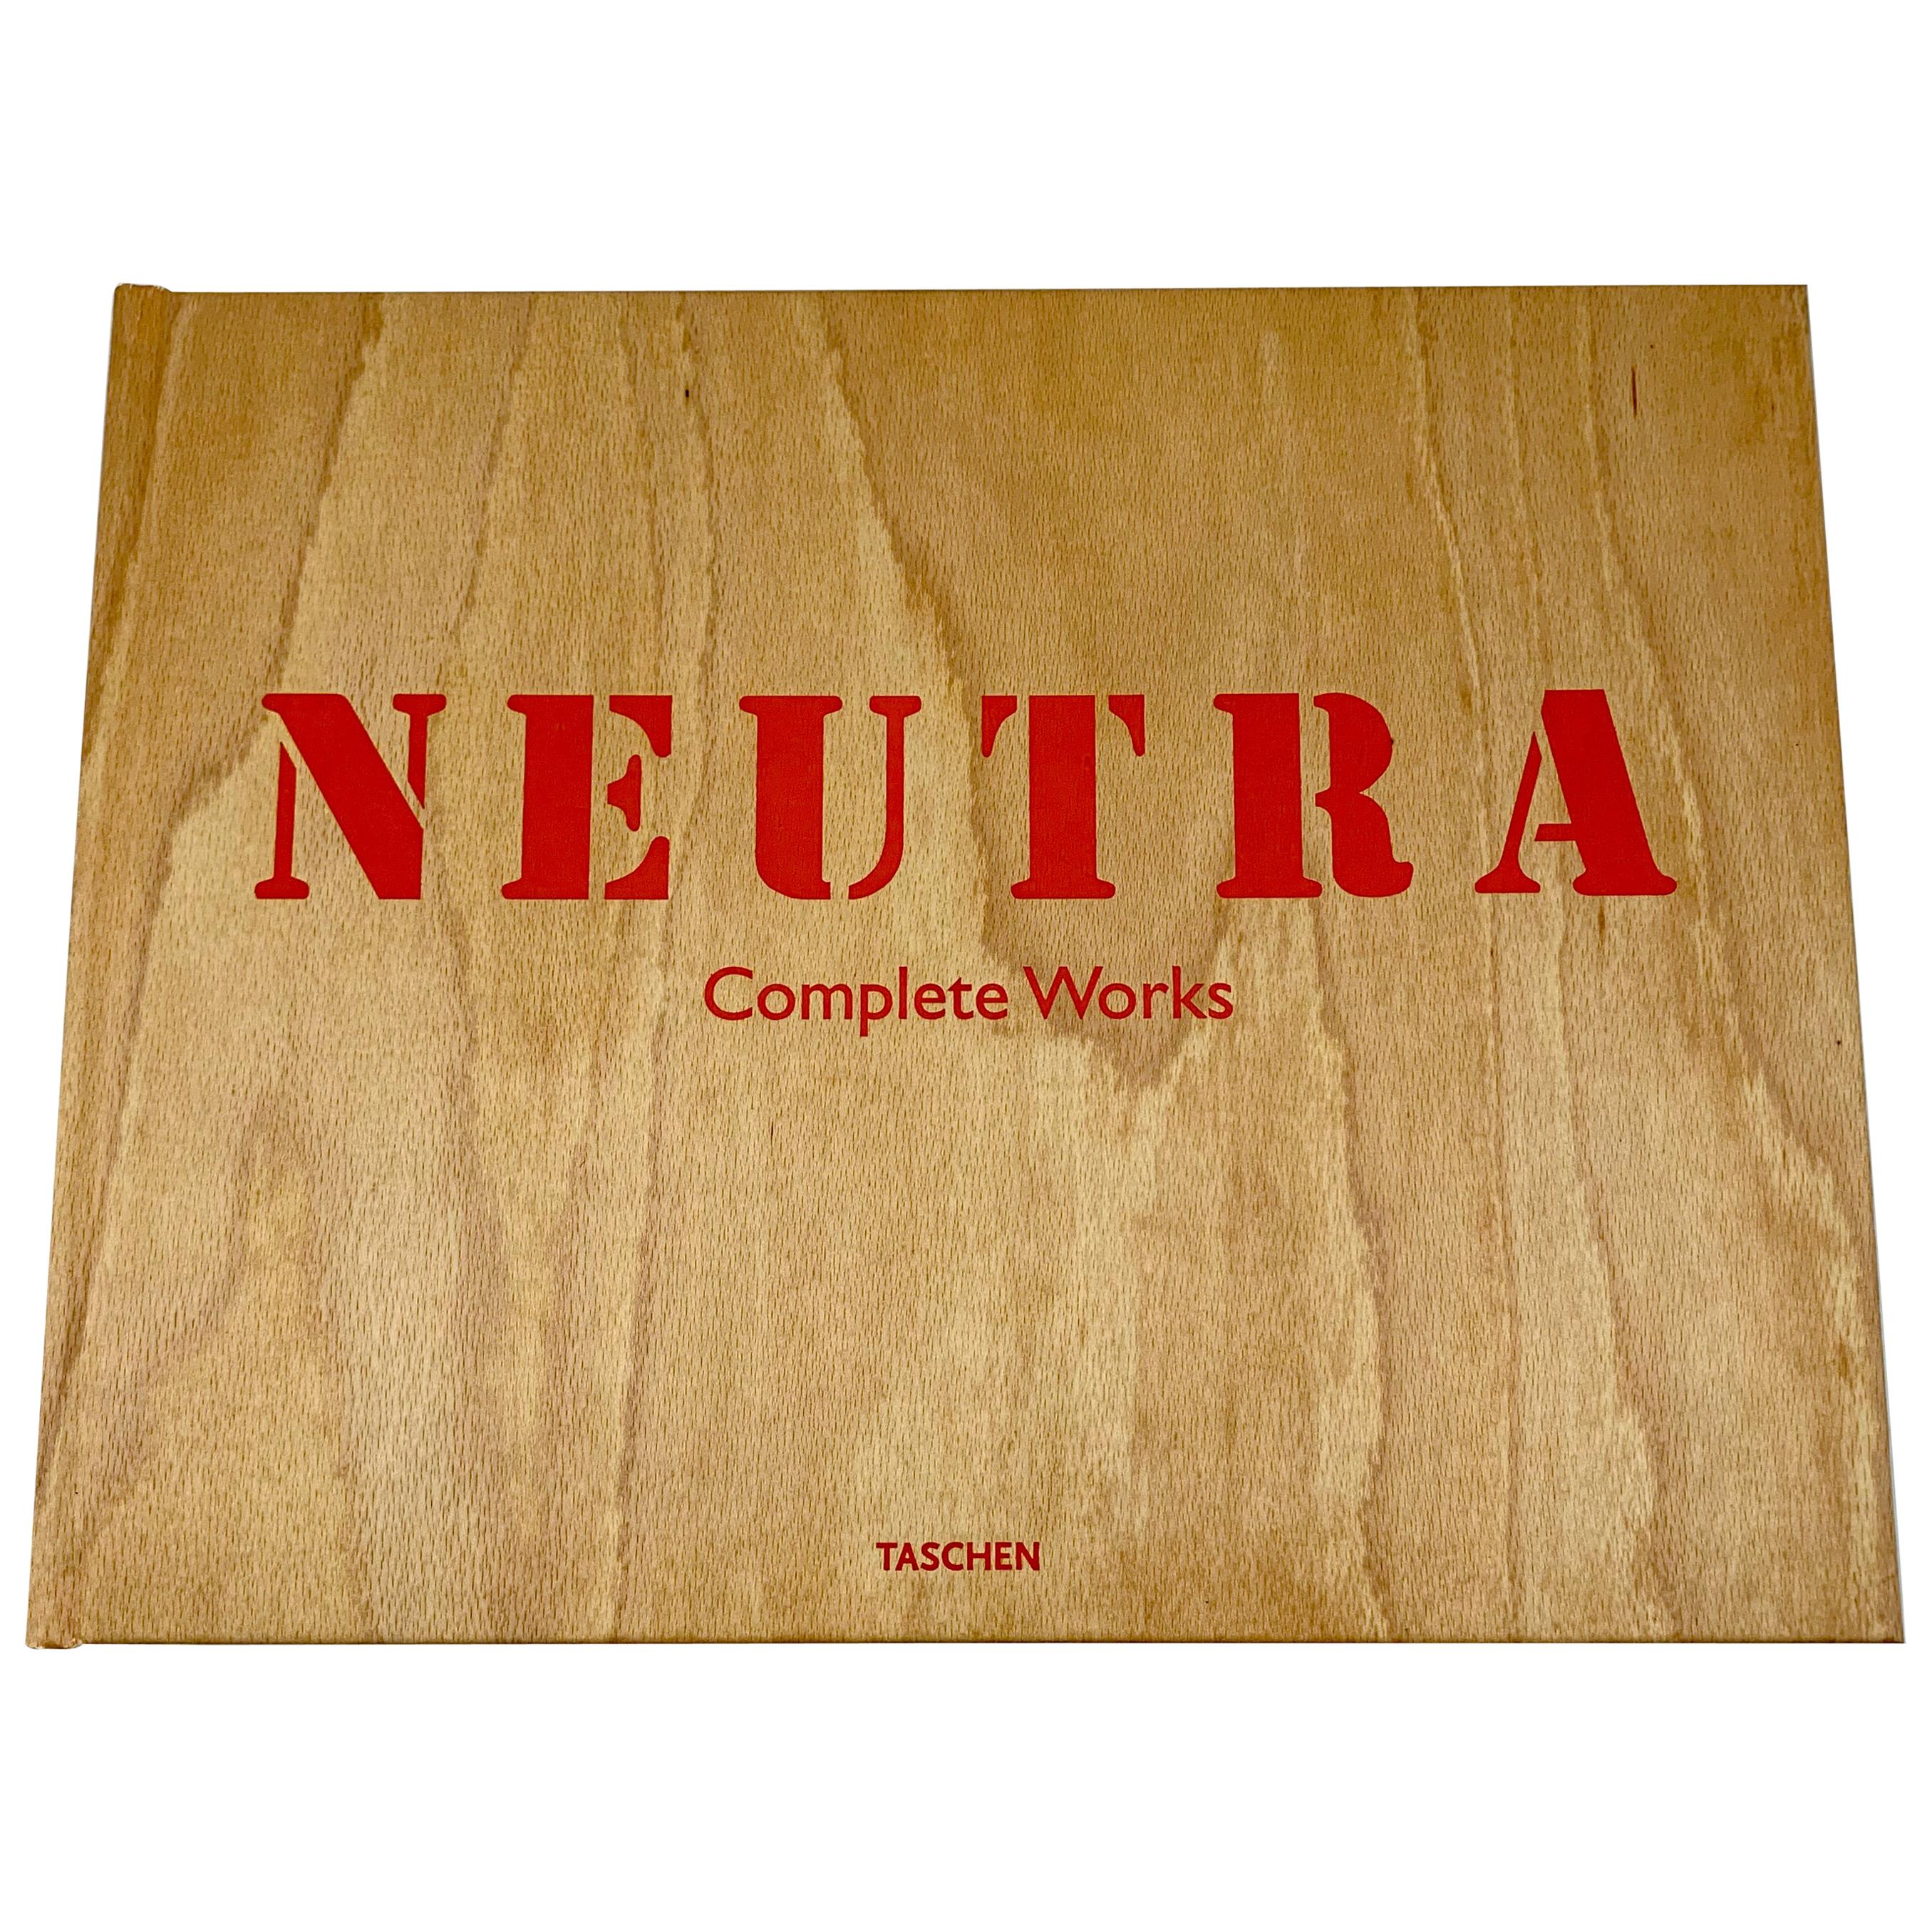 Richard Neutra, the Complete Works, Wood Bound Architecture Book, Original Box